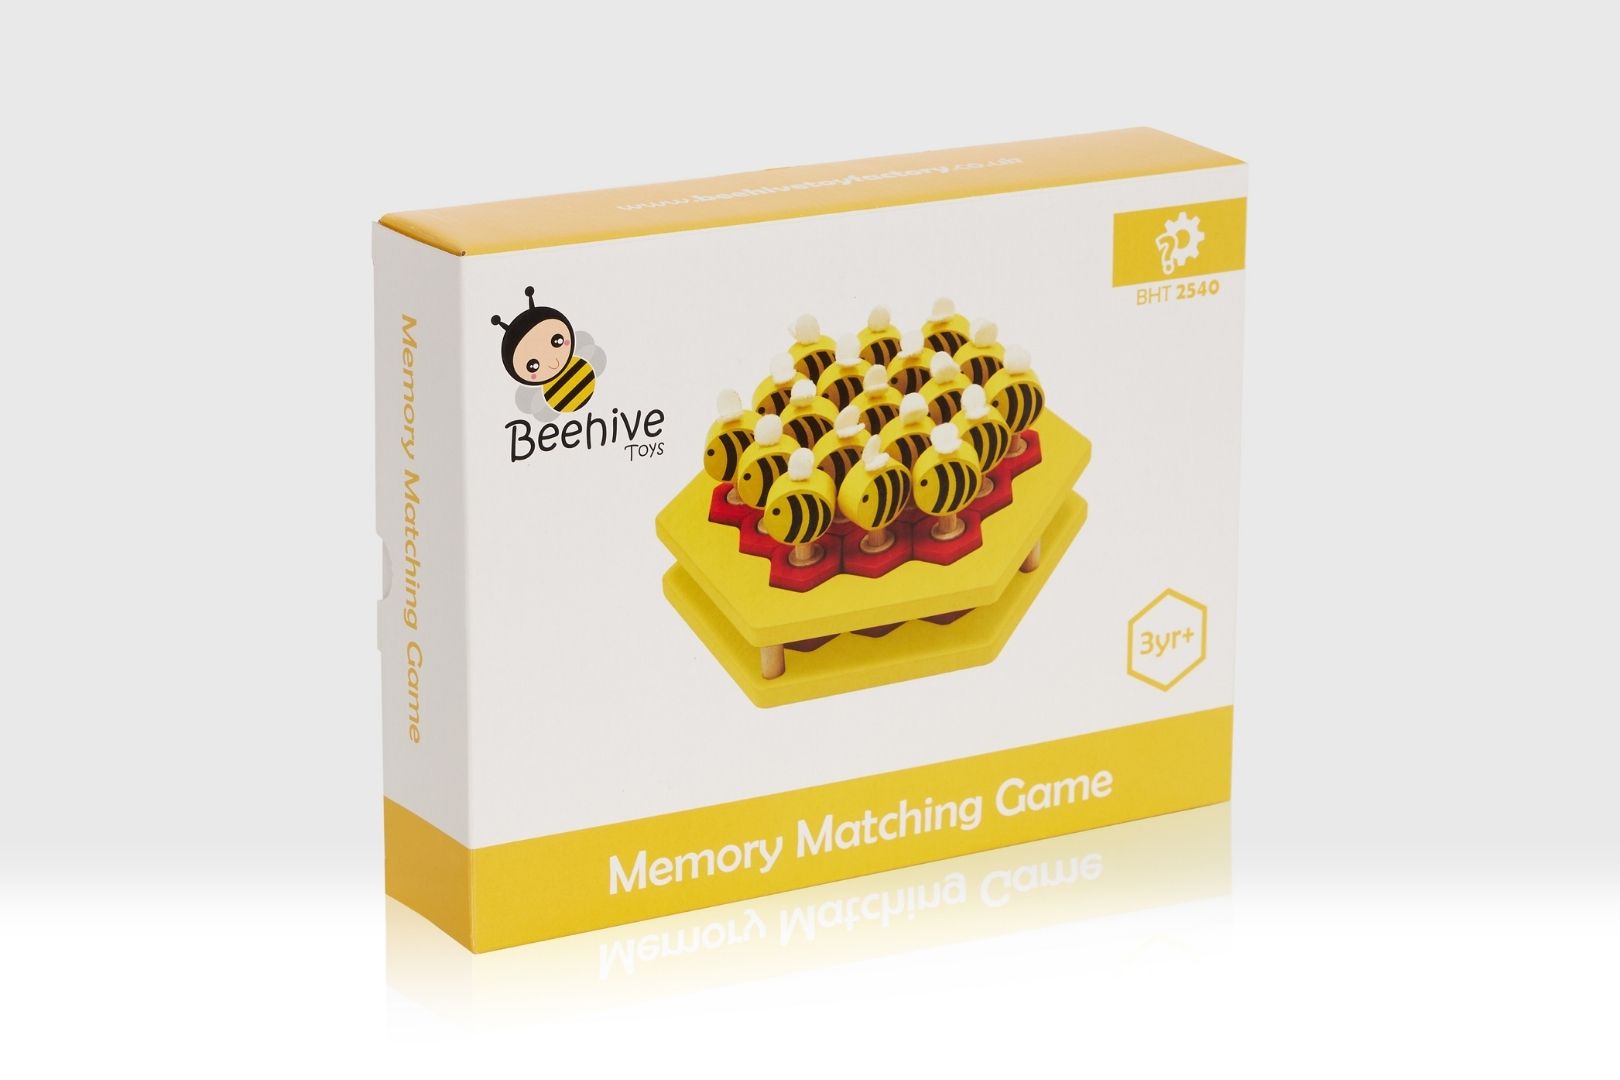 Beehive Memory Matching Game